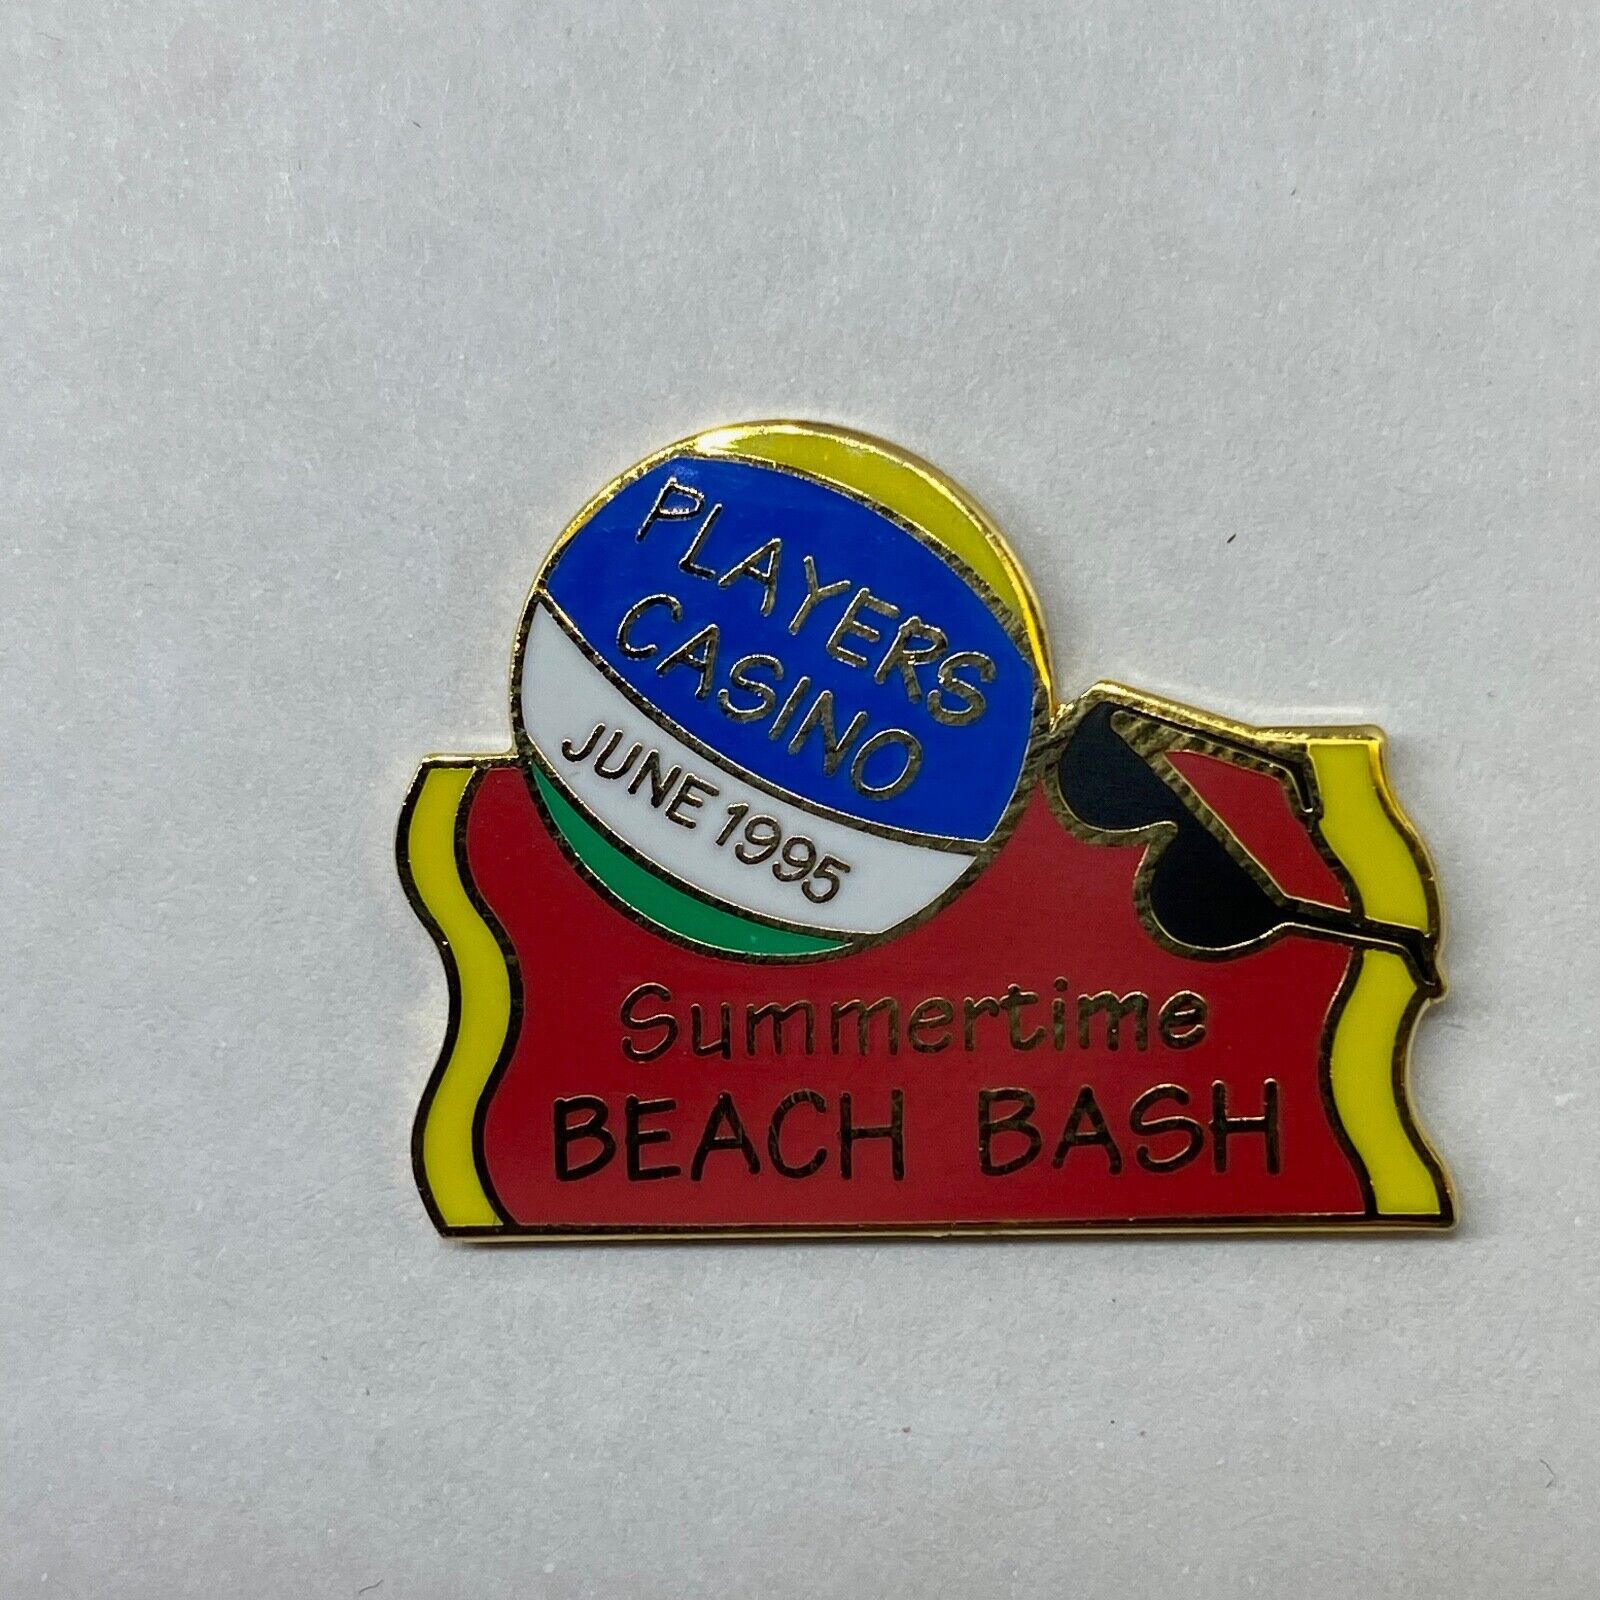 Vintage Players Casino Summertime Beach Bash 1995 Pinnacle Designs Button Pin